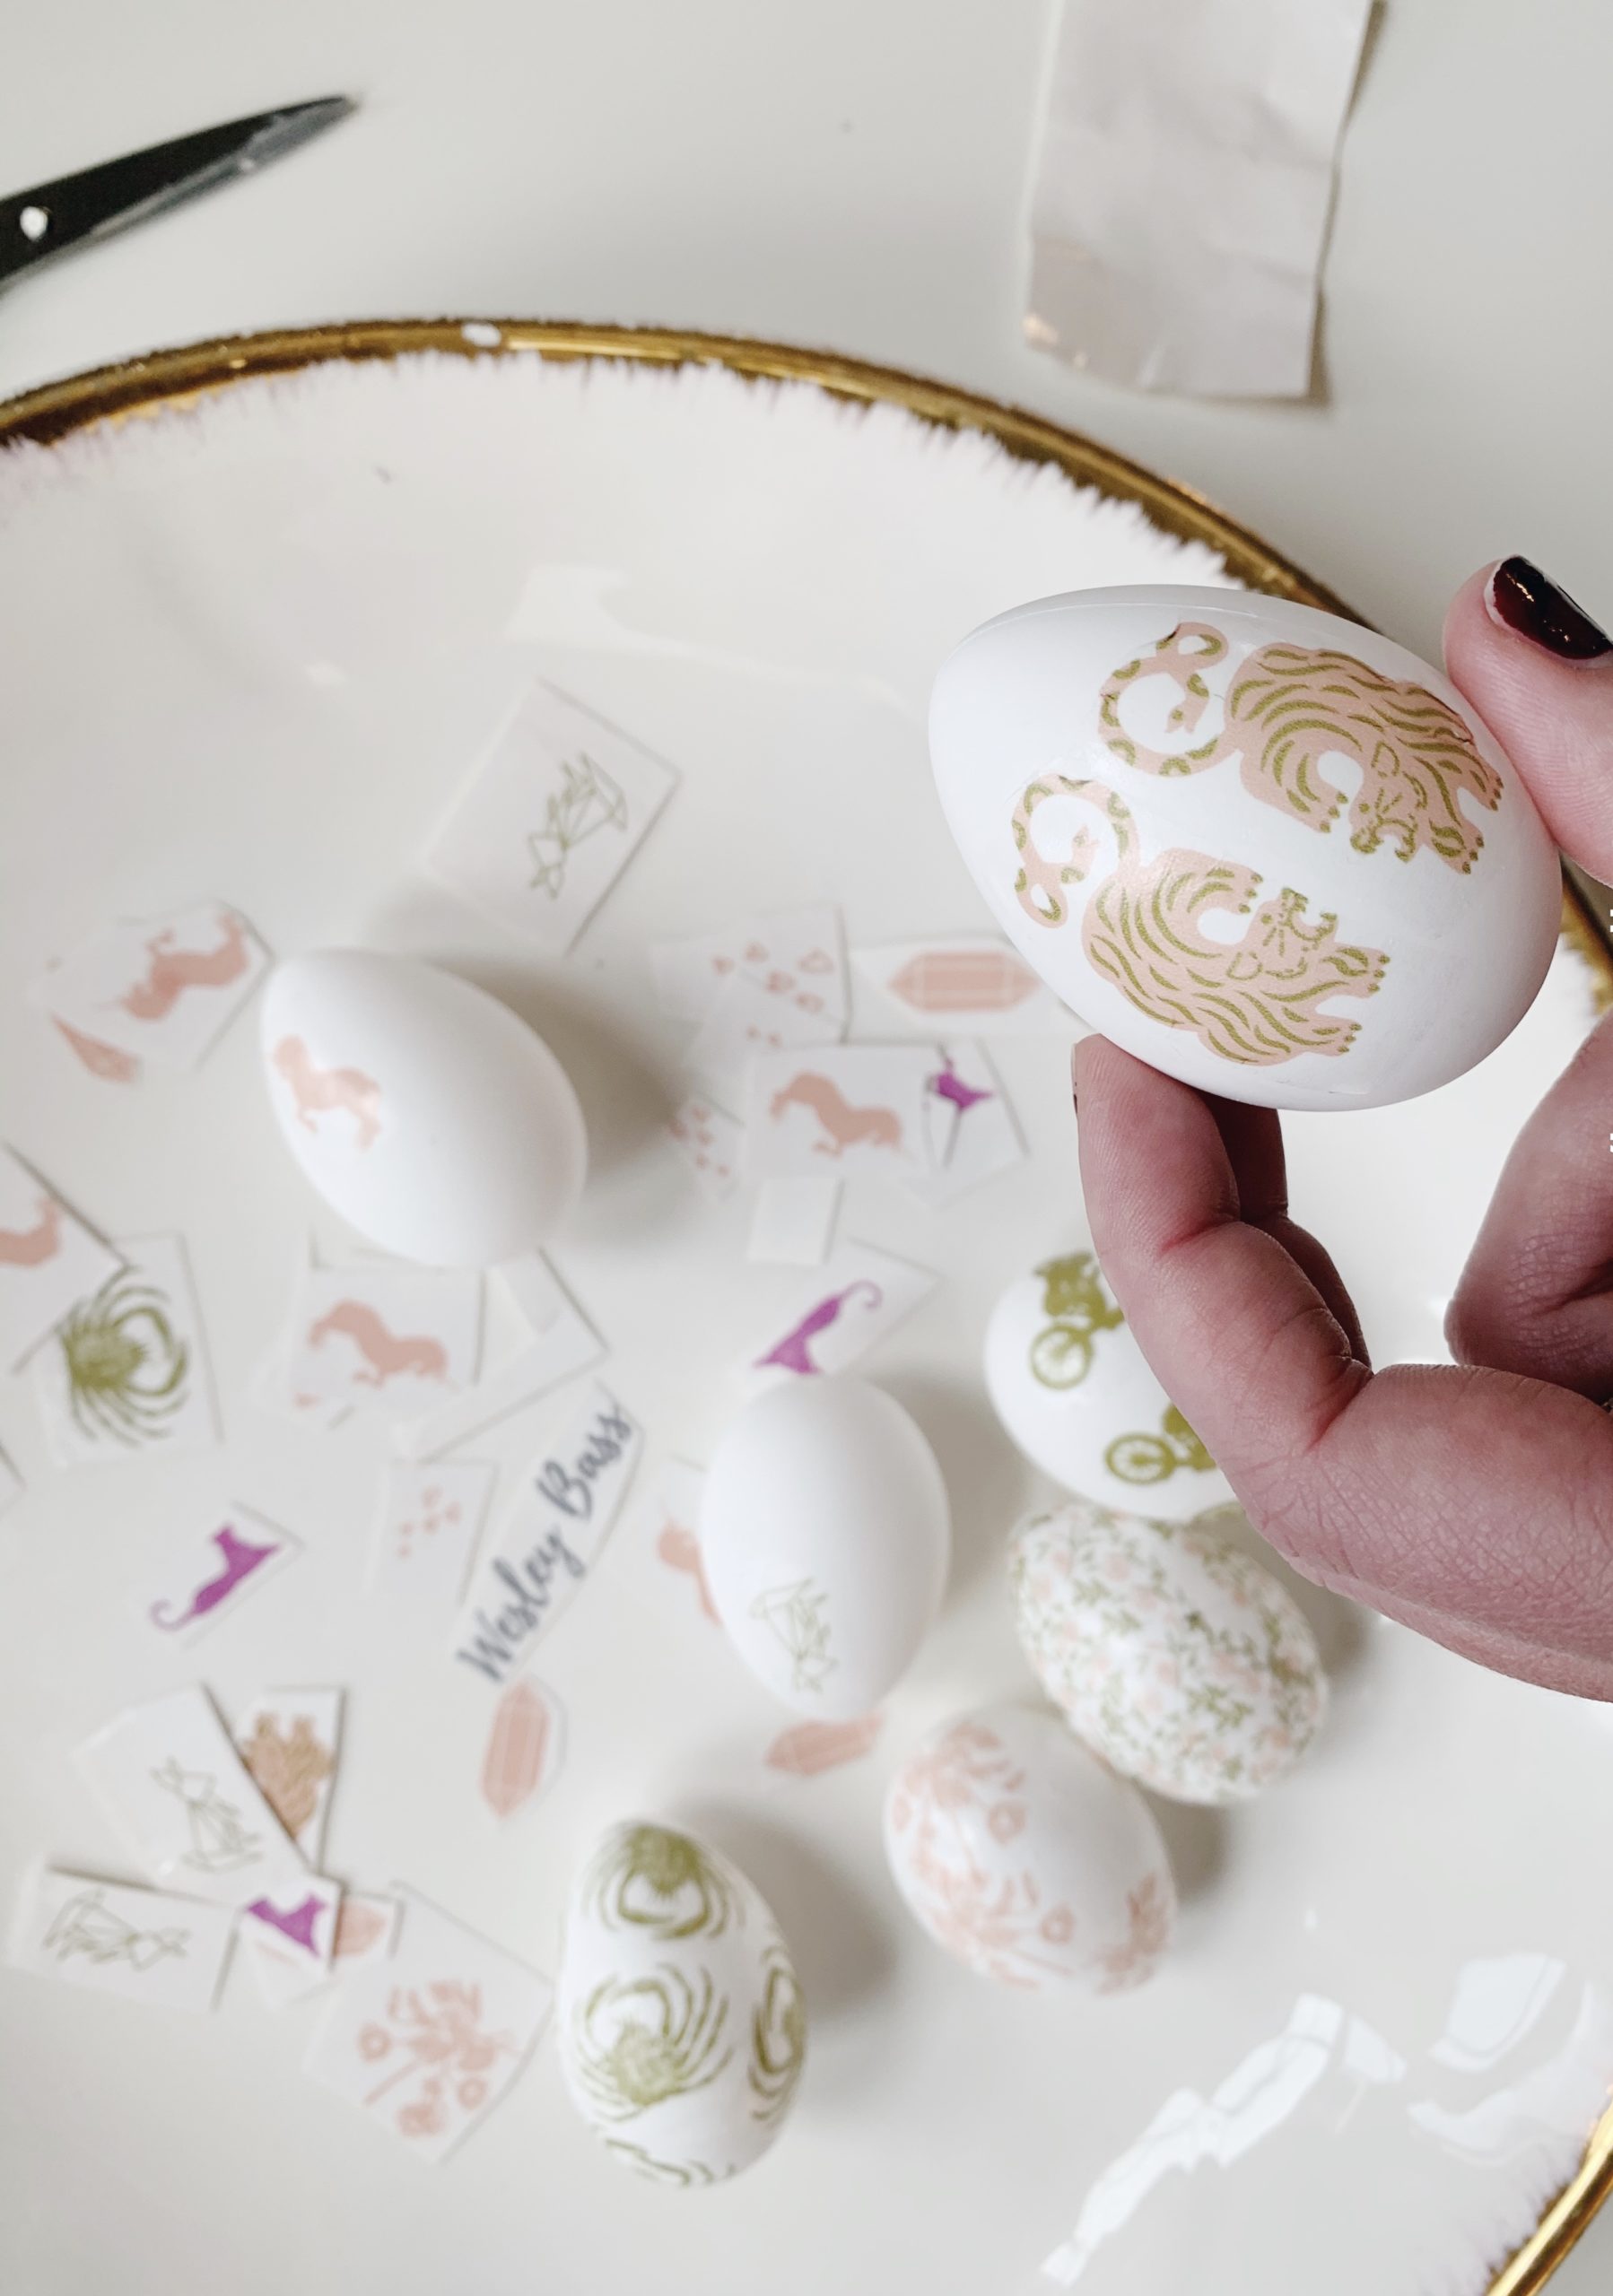 Temporary Tattoo Easter Eggs